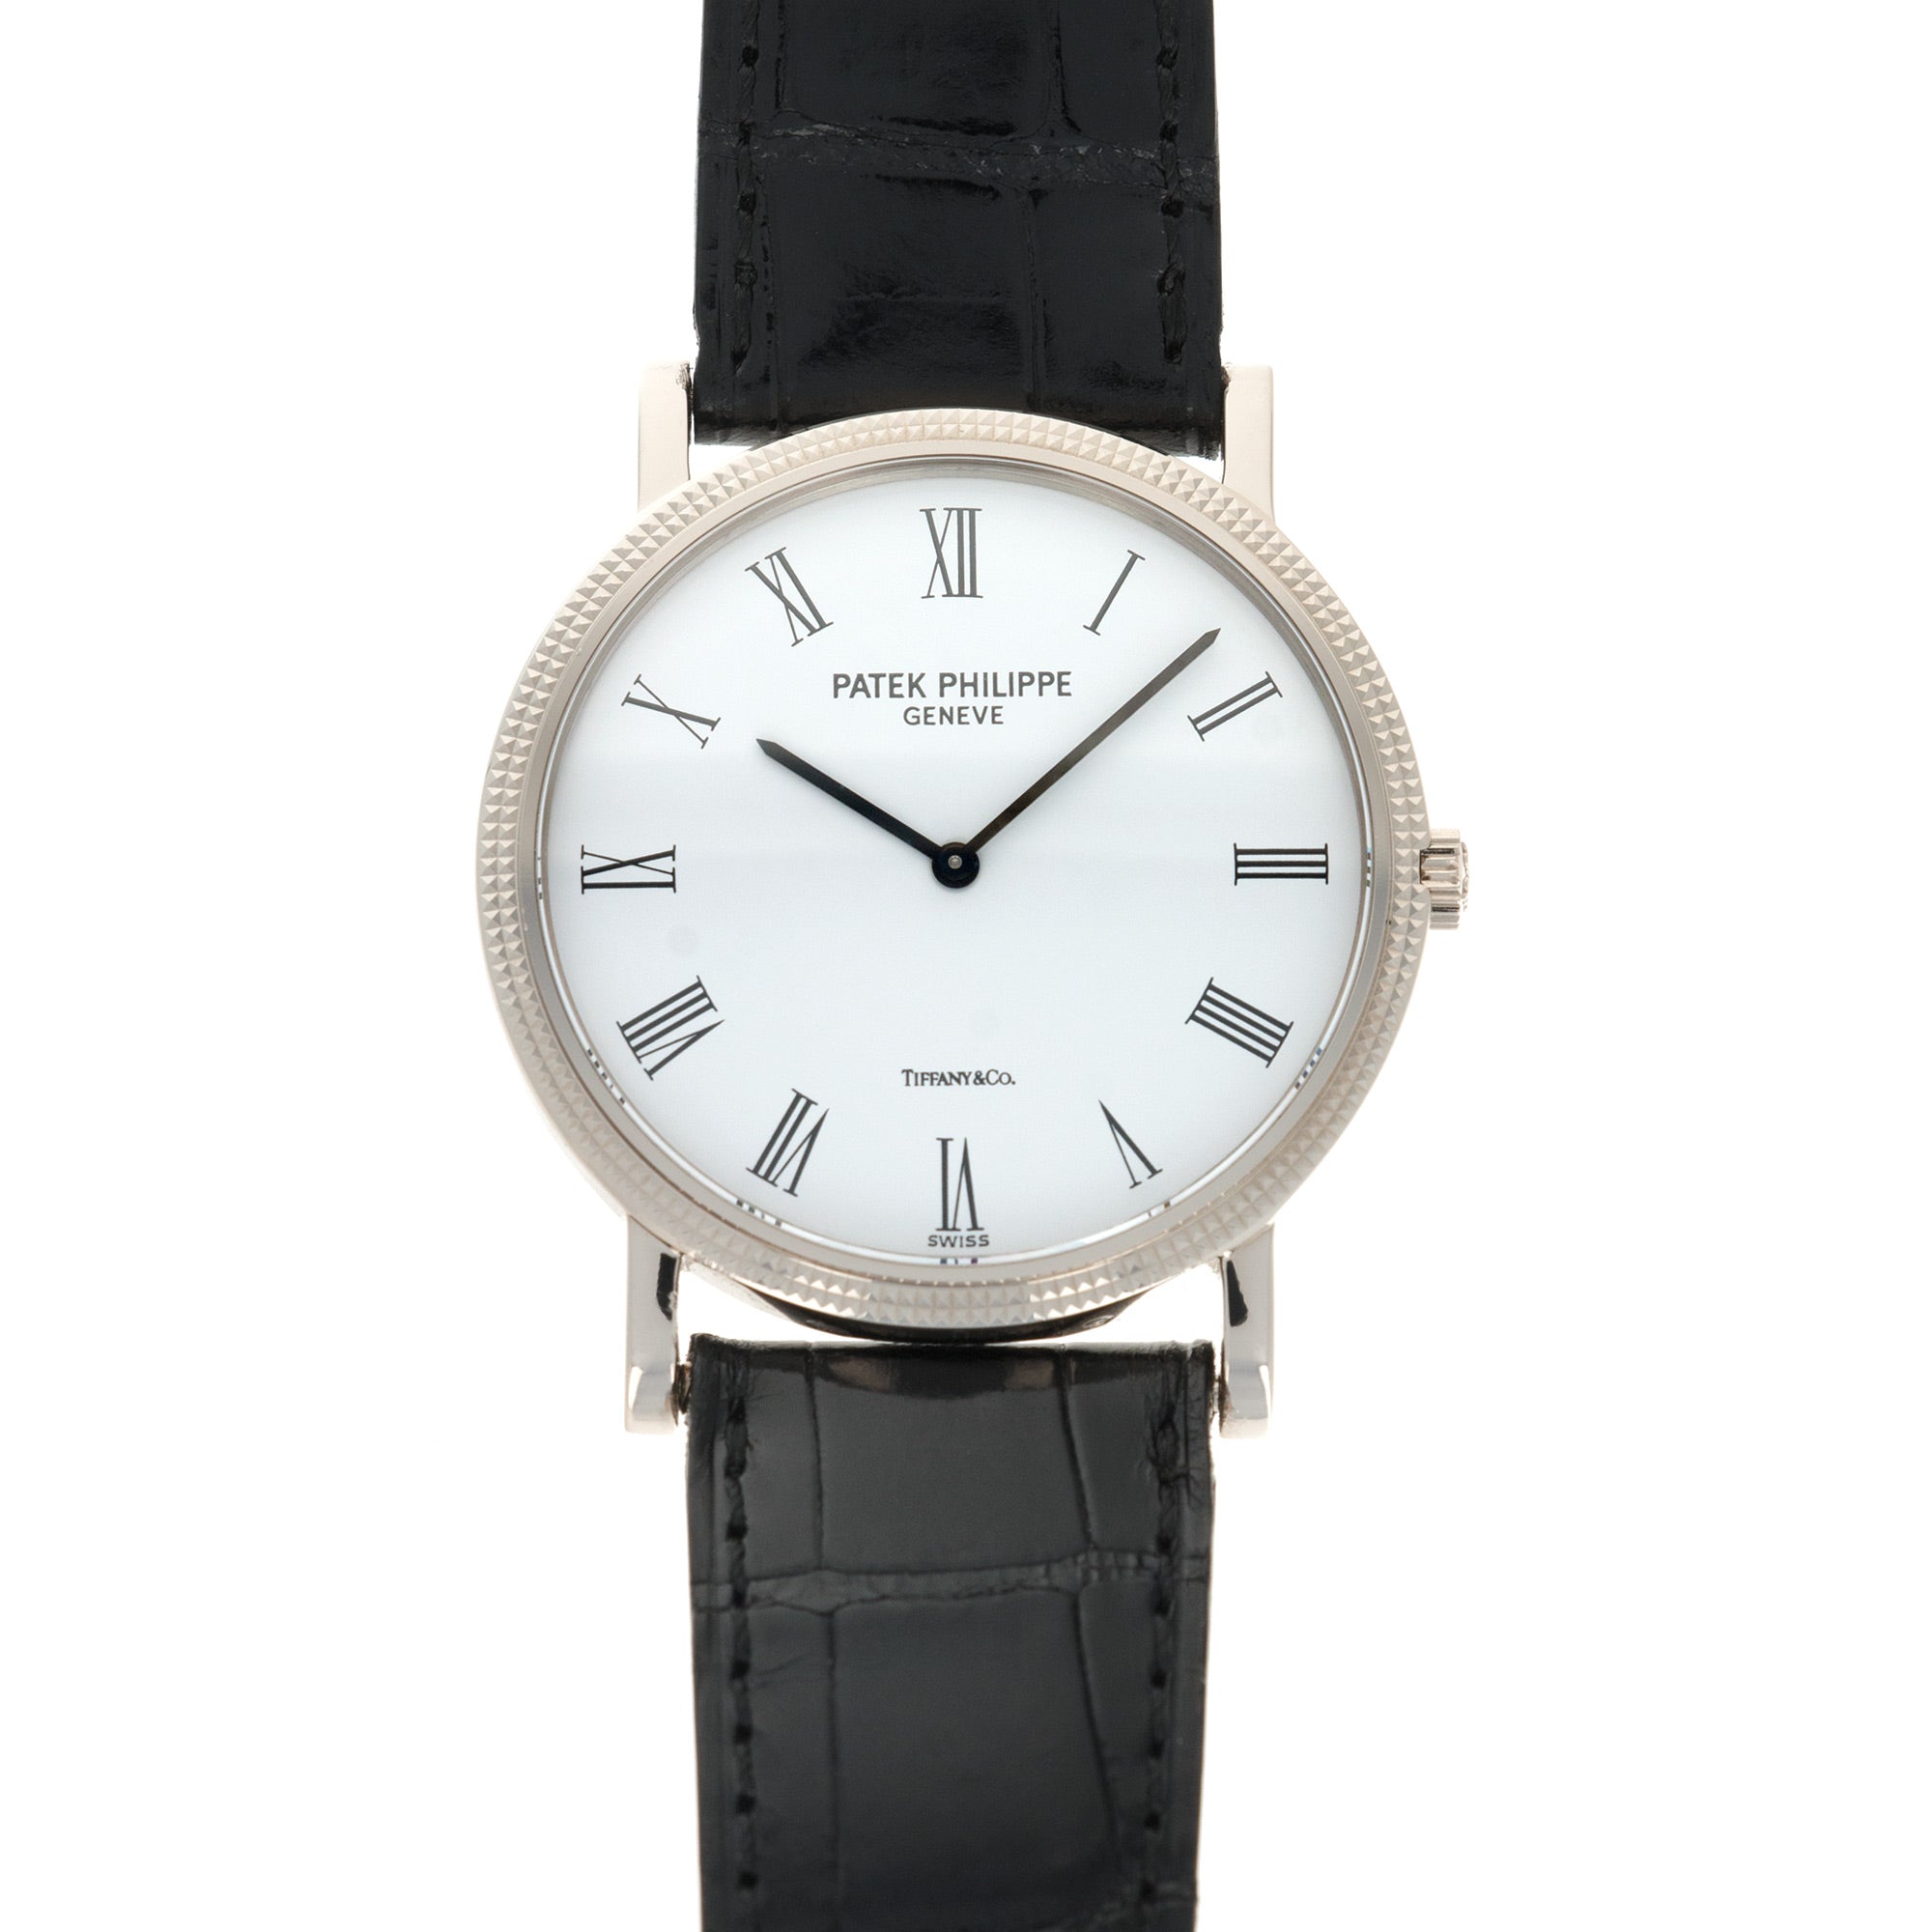 Patek Philippe - Patek Philippe White Gold Calatrava Watch, Ref. 3520 Retailed by Tiffany & Co. - The Keystone Watches